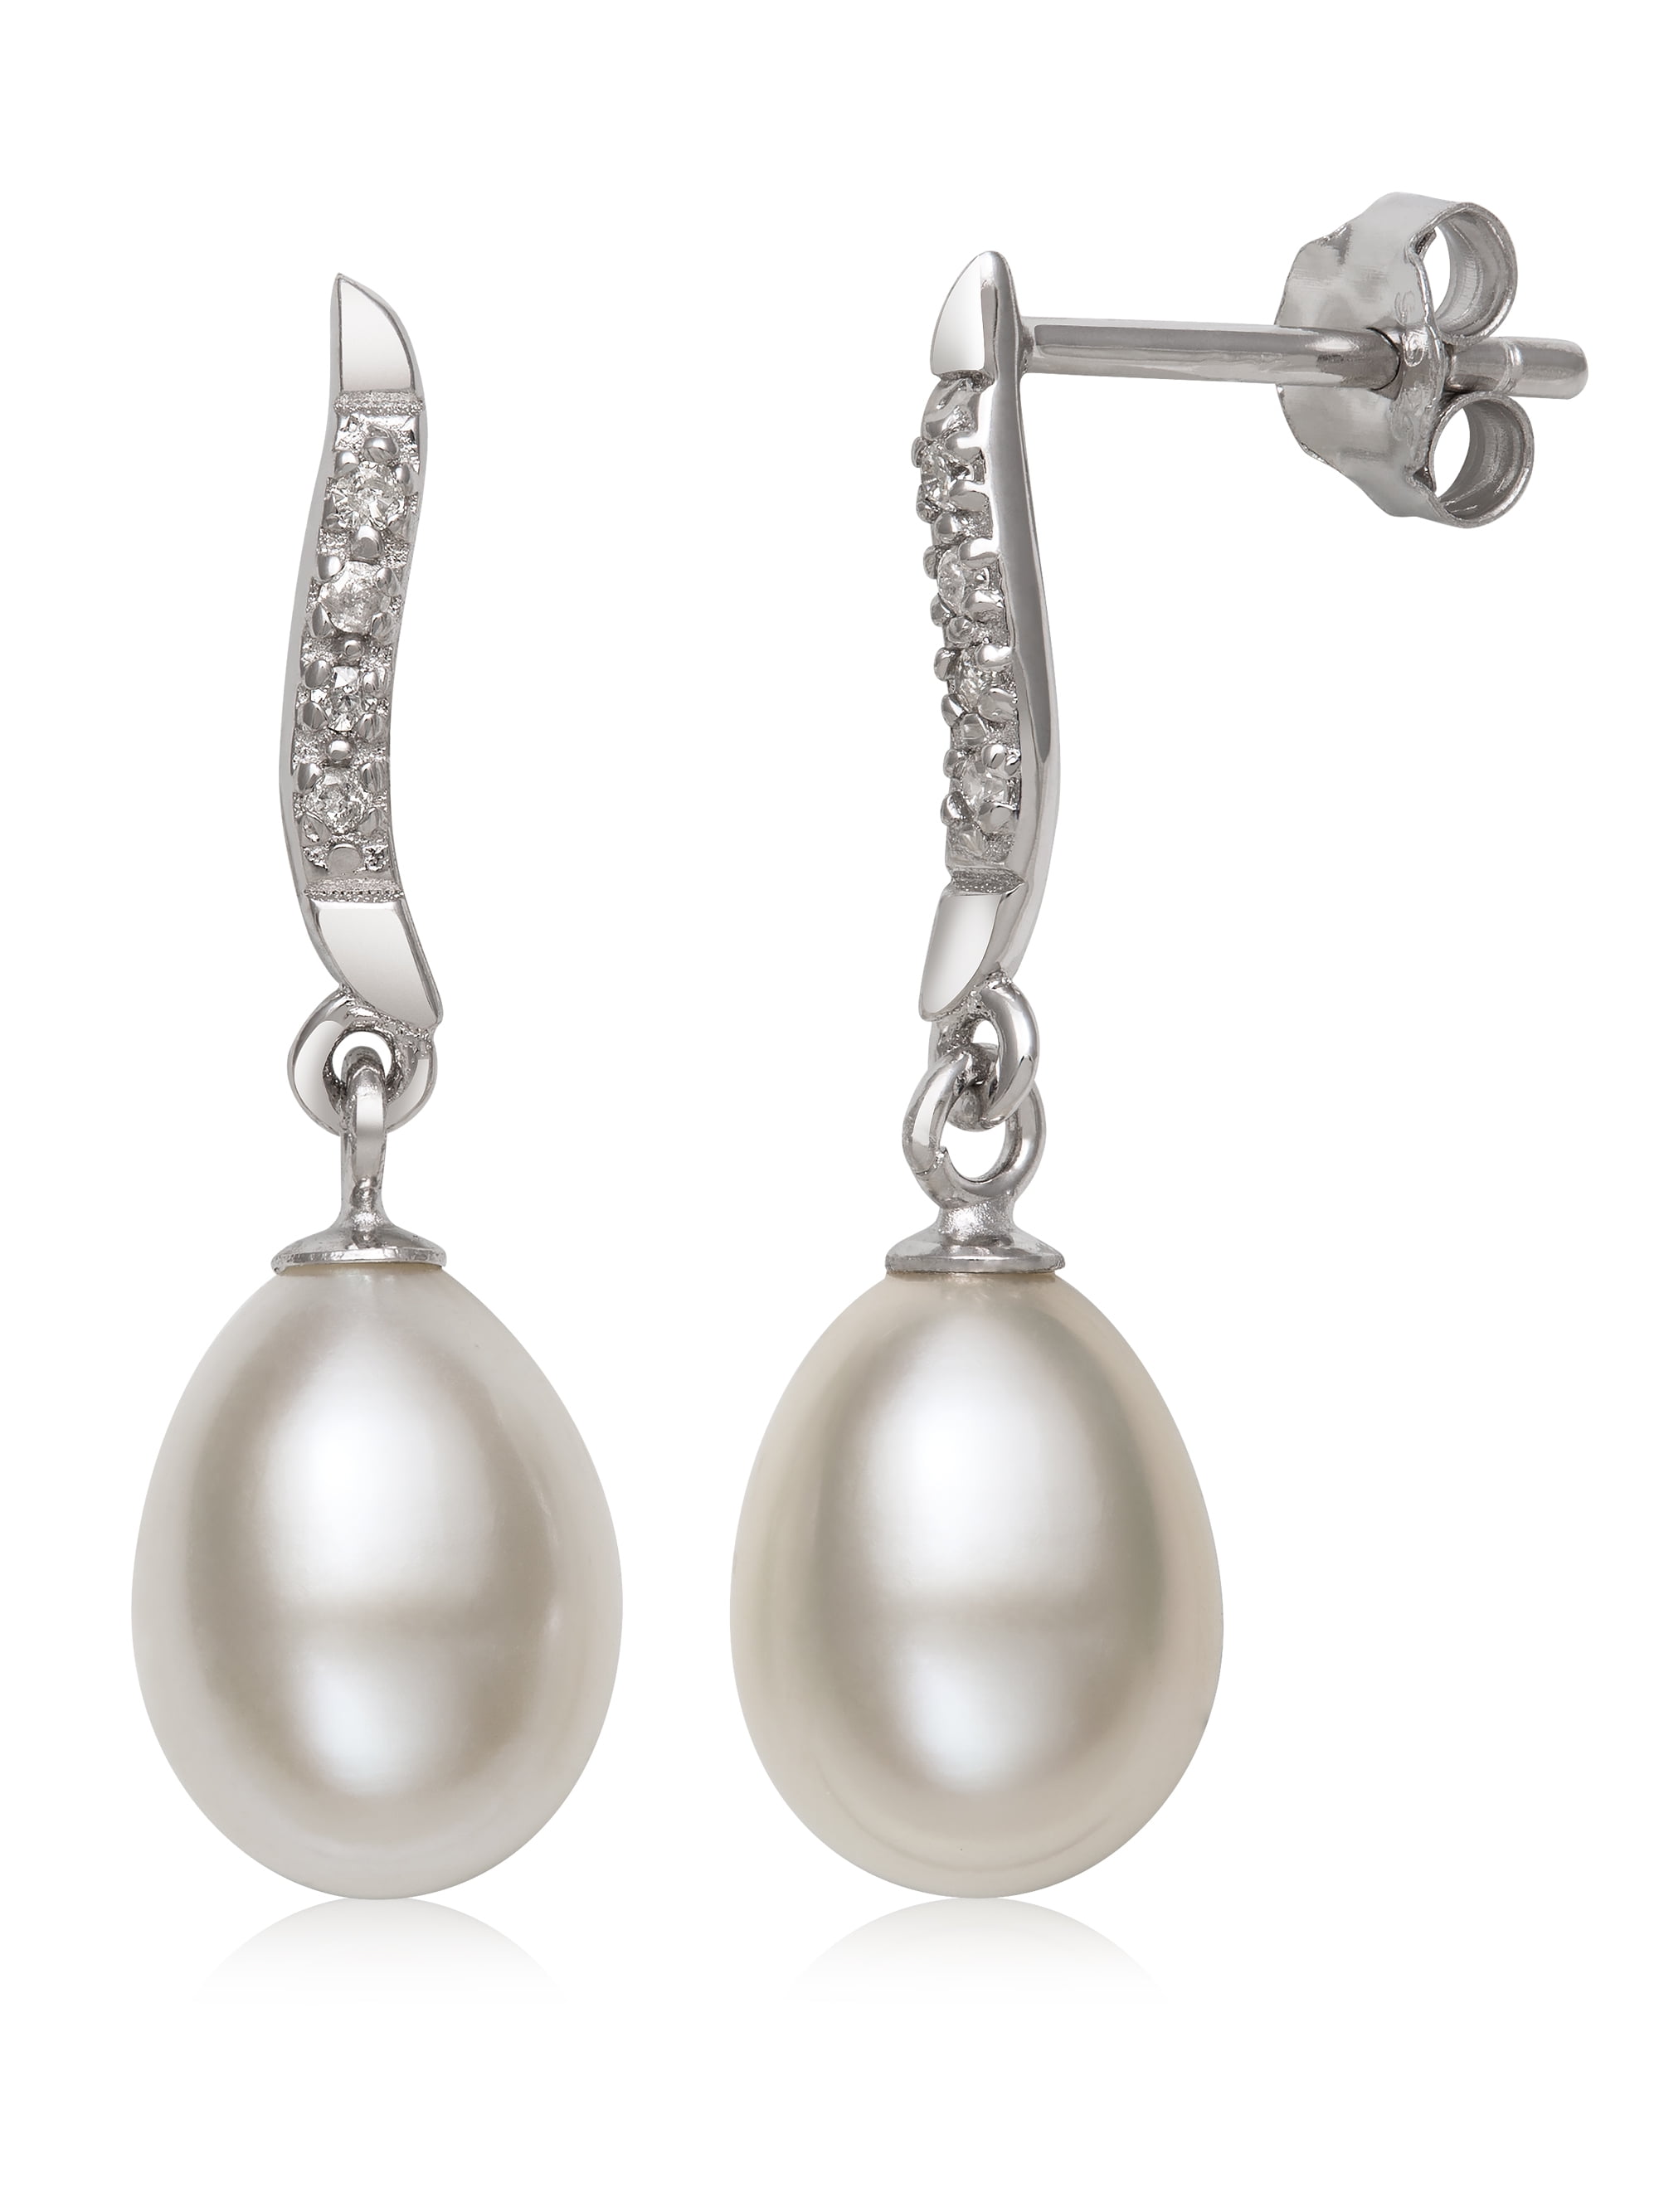 Womens Gift All Occasion Earring Elegant Dangle Earring Silver plated Wire Framed Earring Freshwater Pearl Pearl & Leaf Drop Earring